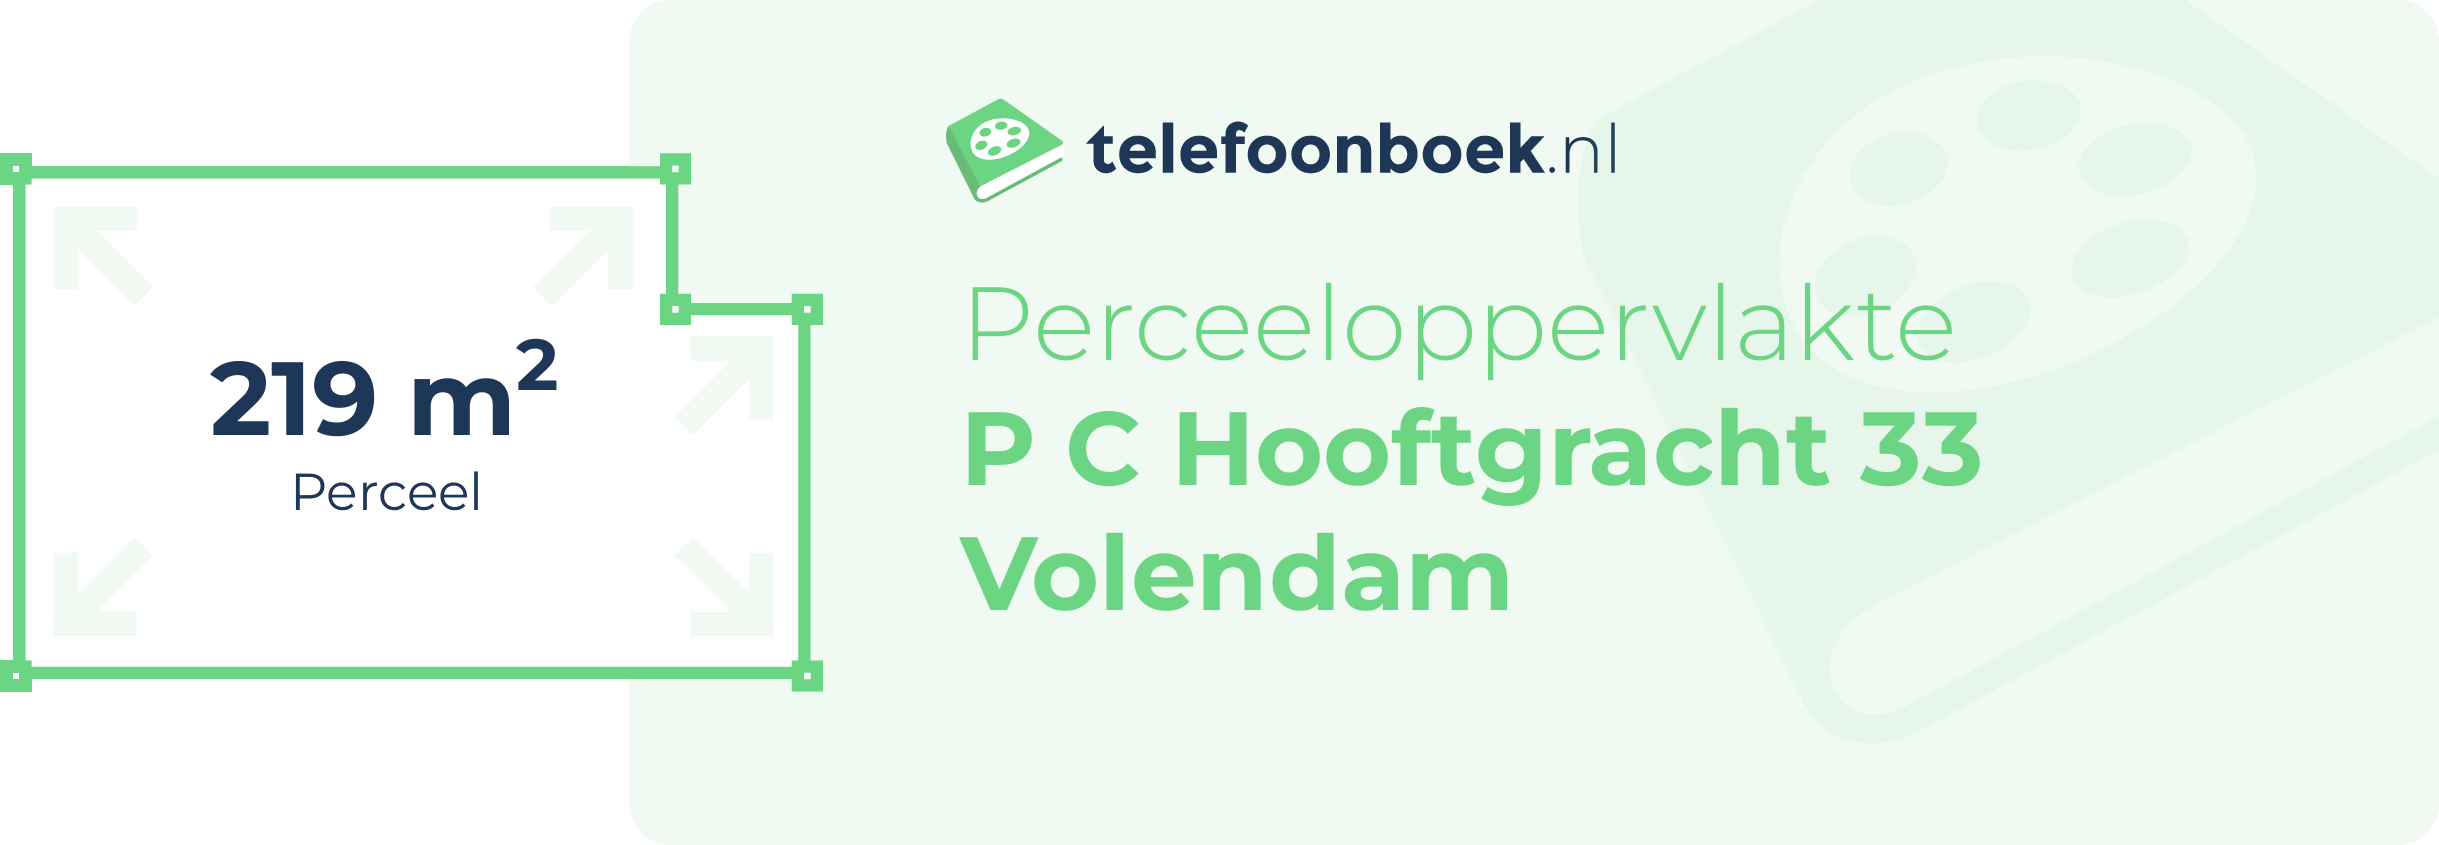 Perceeloppervlakte P C Hooftgracht 33 Volendam